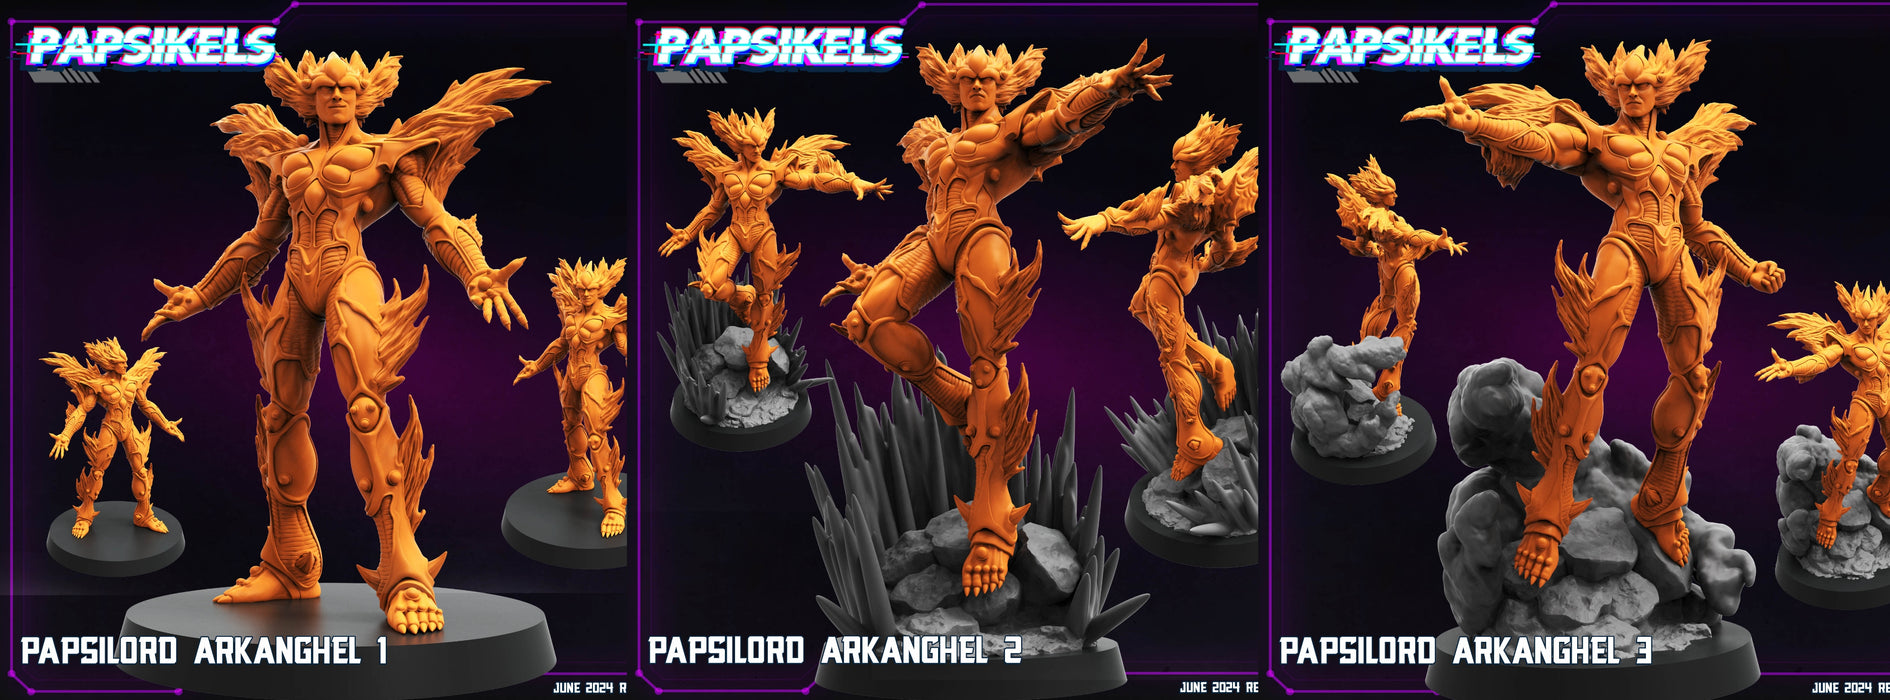 Papsilord Arkanghel Miniatures | Cyberpunk | Sci-Fi Miniature | Papsikels